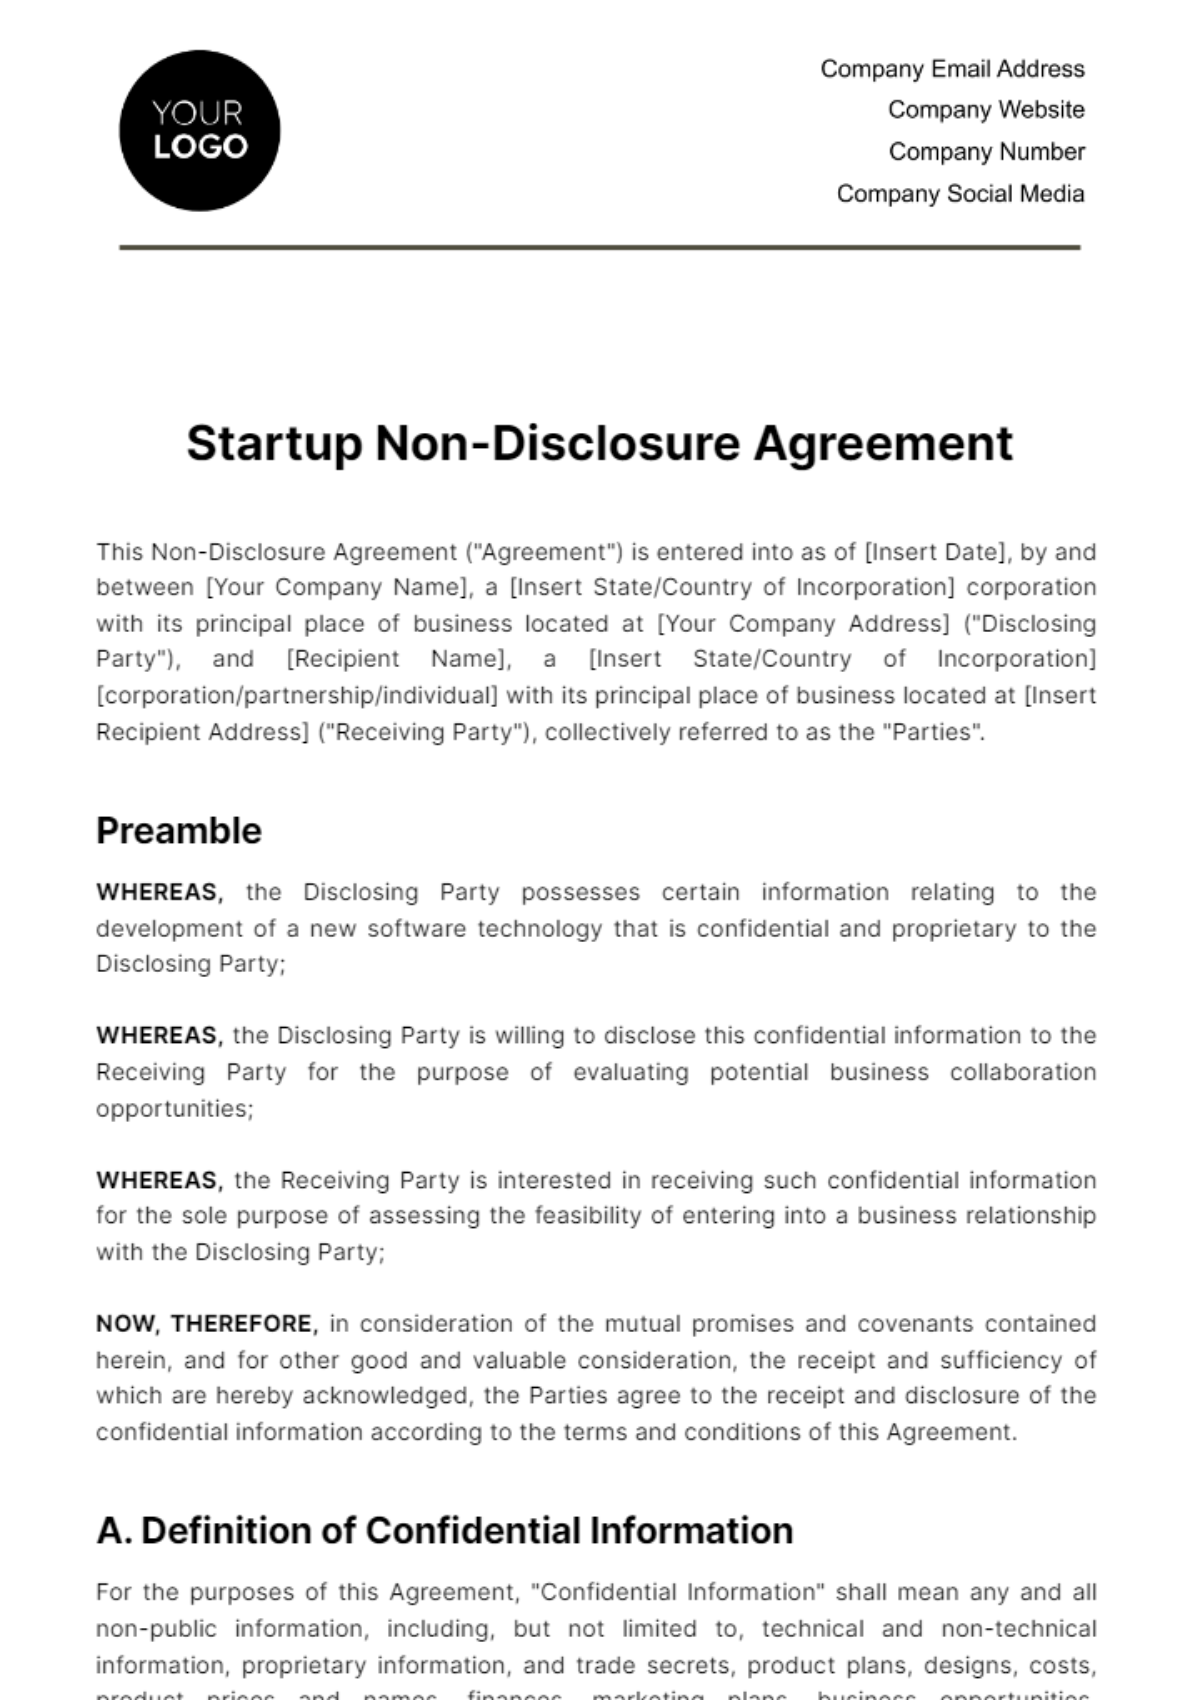 Free Startup Non-Disclosure Agreement (NDA) Template